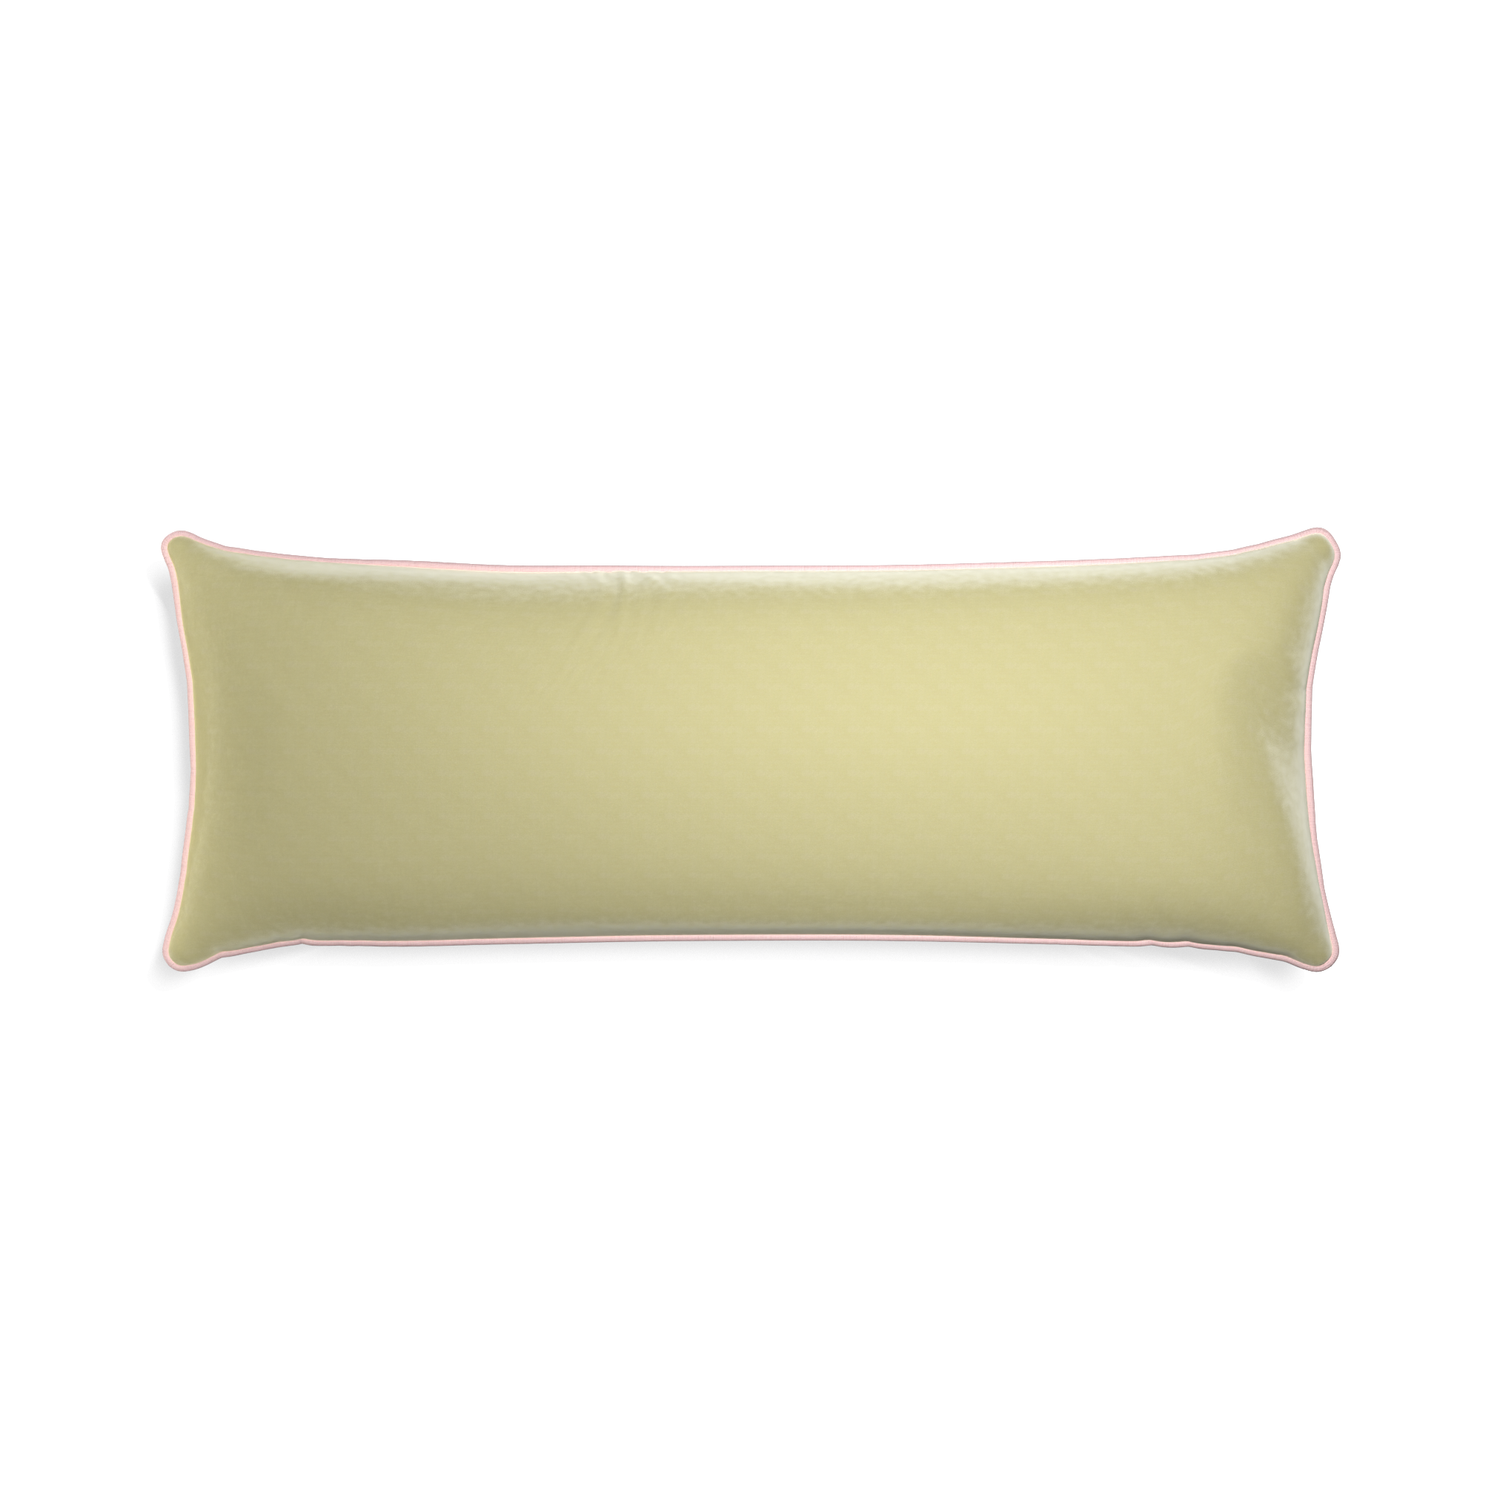 rectangle light green velvet pillow with light pink piping